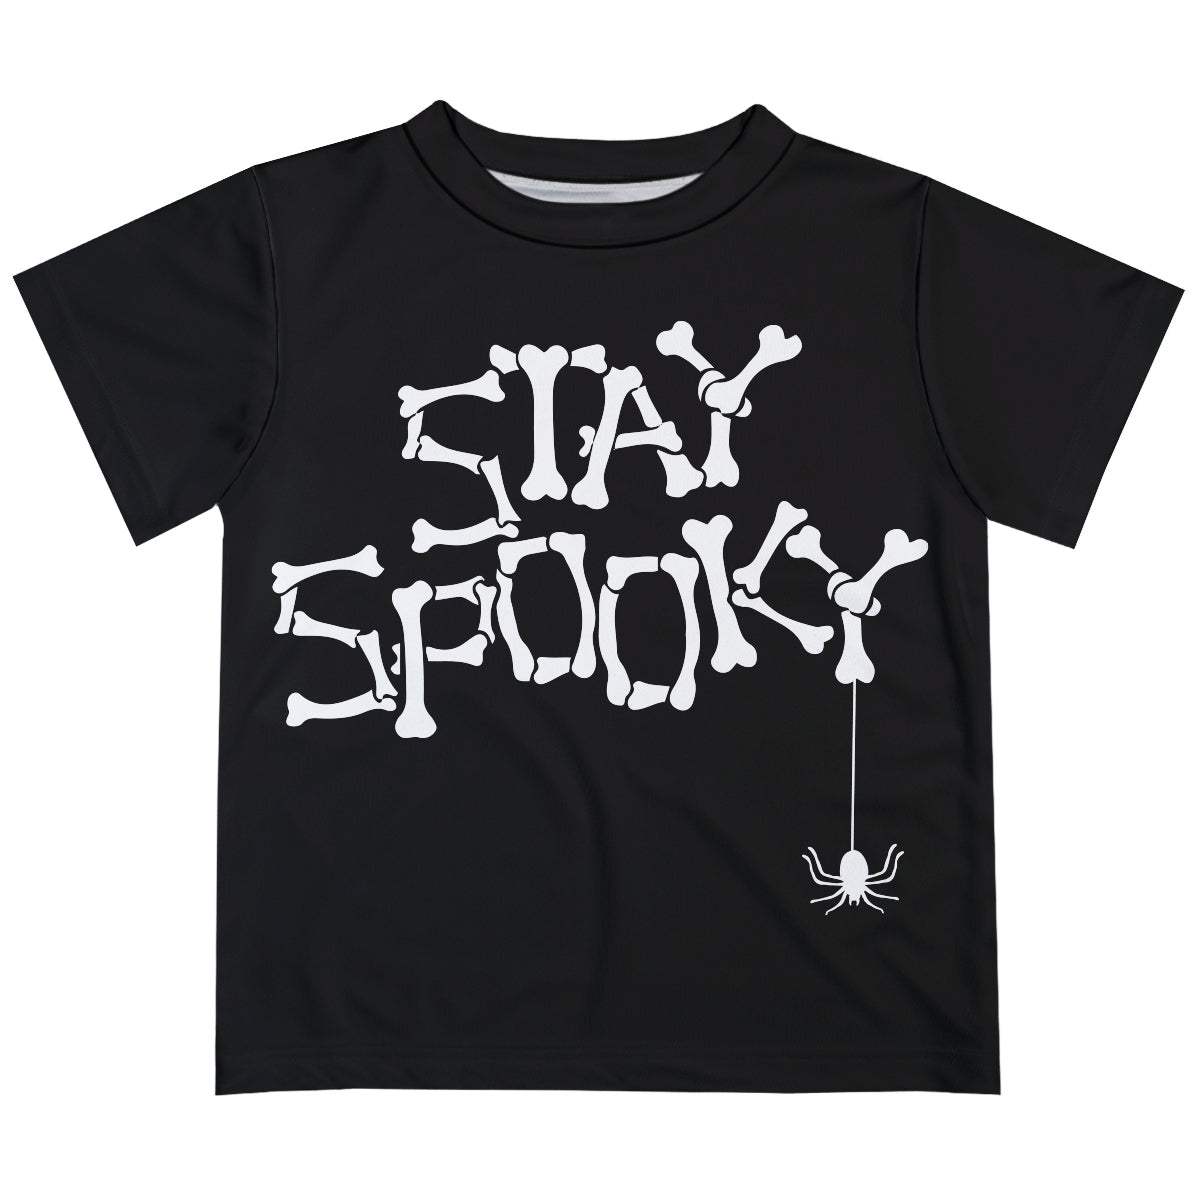 Stay Spooky Black Short Sleeve Tee Shirt